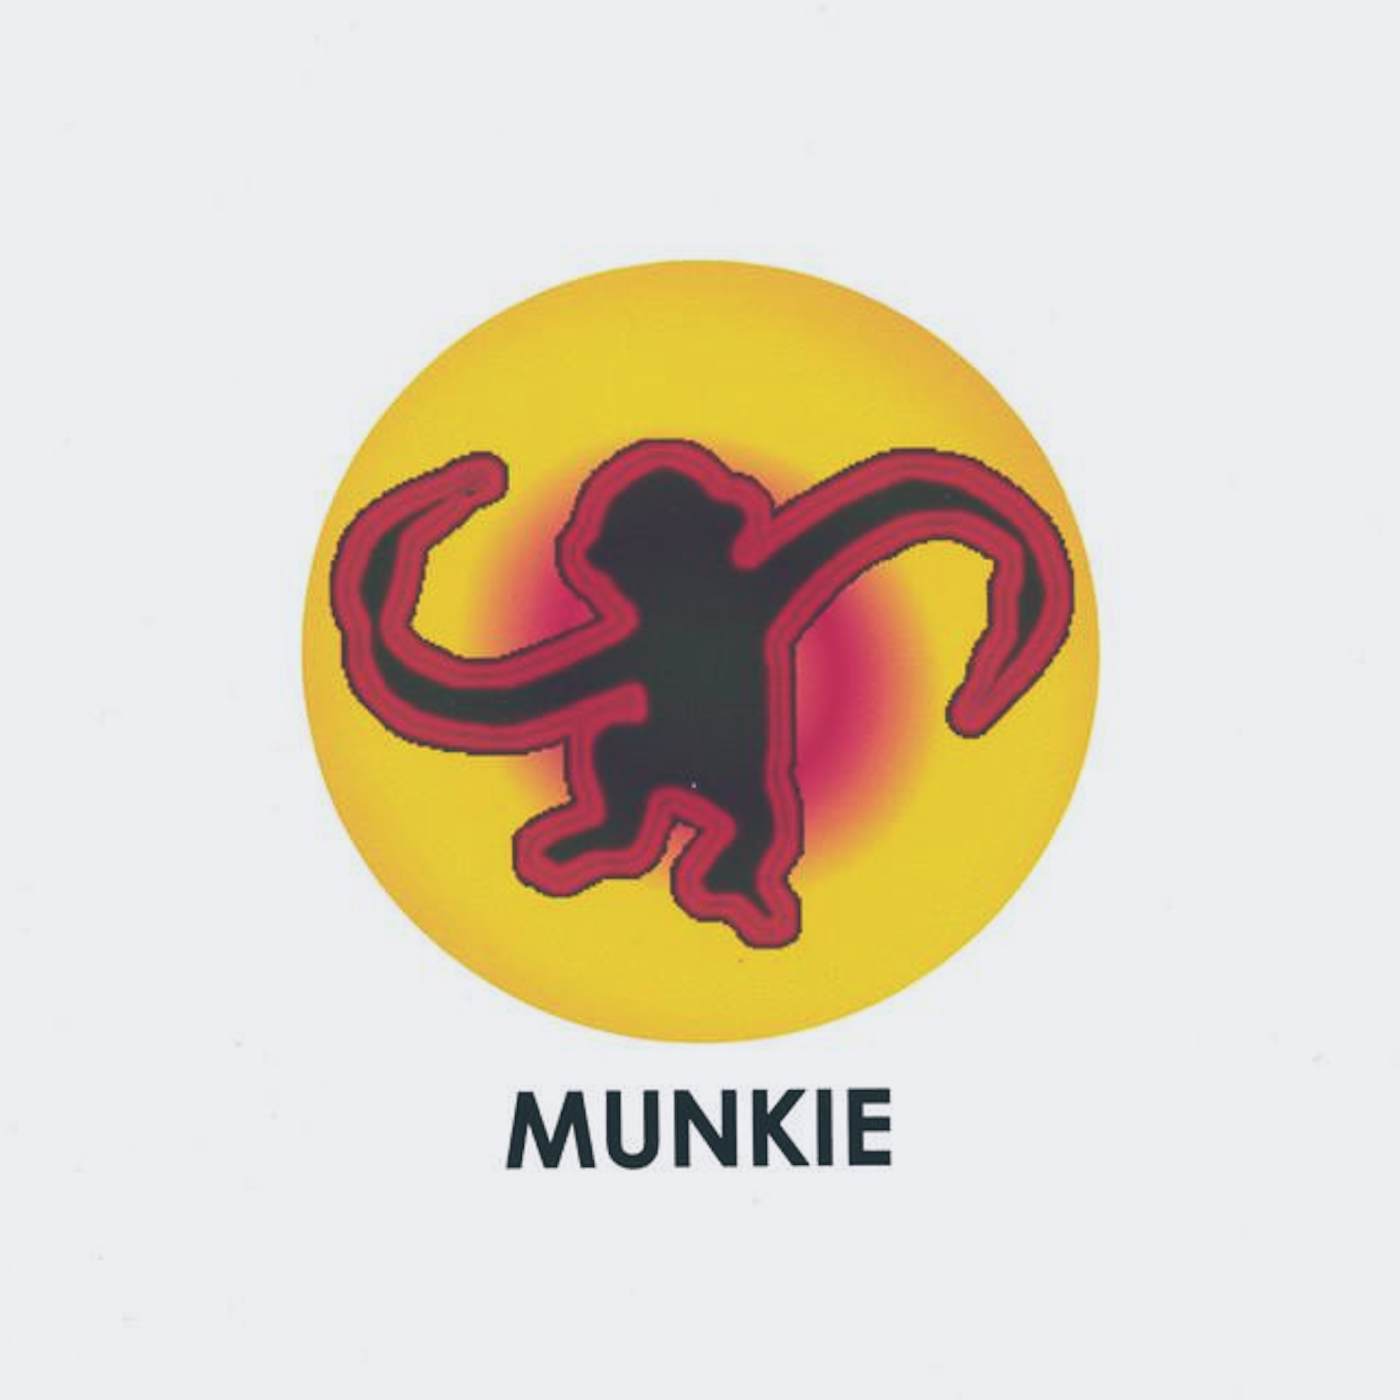 Munkie